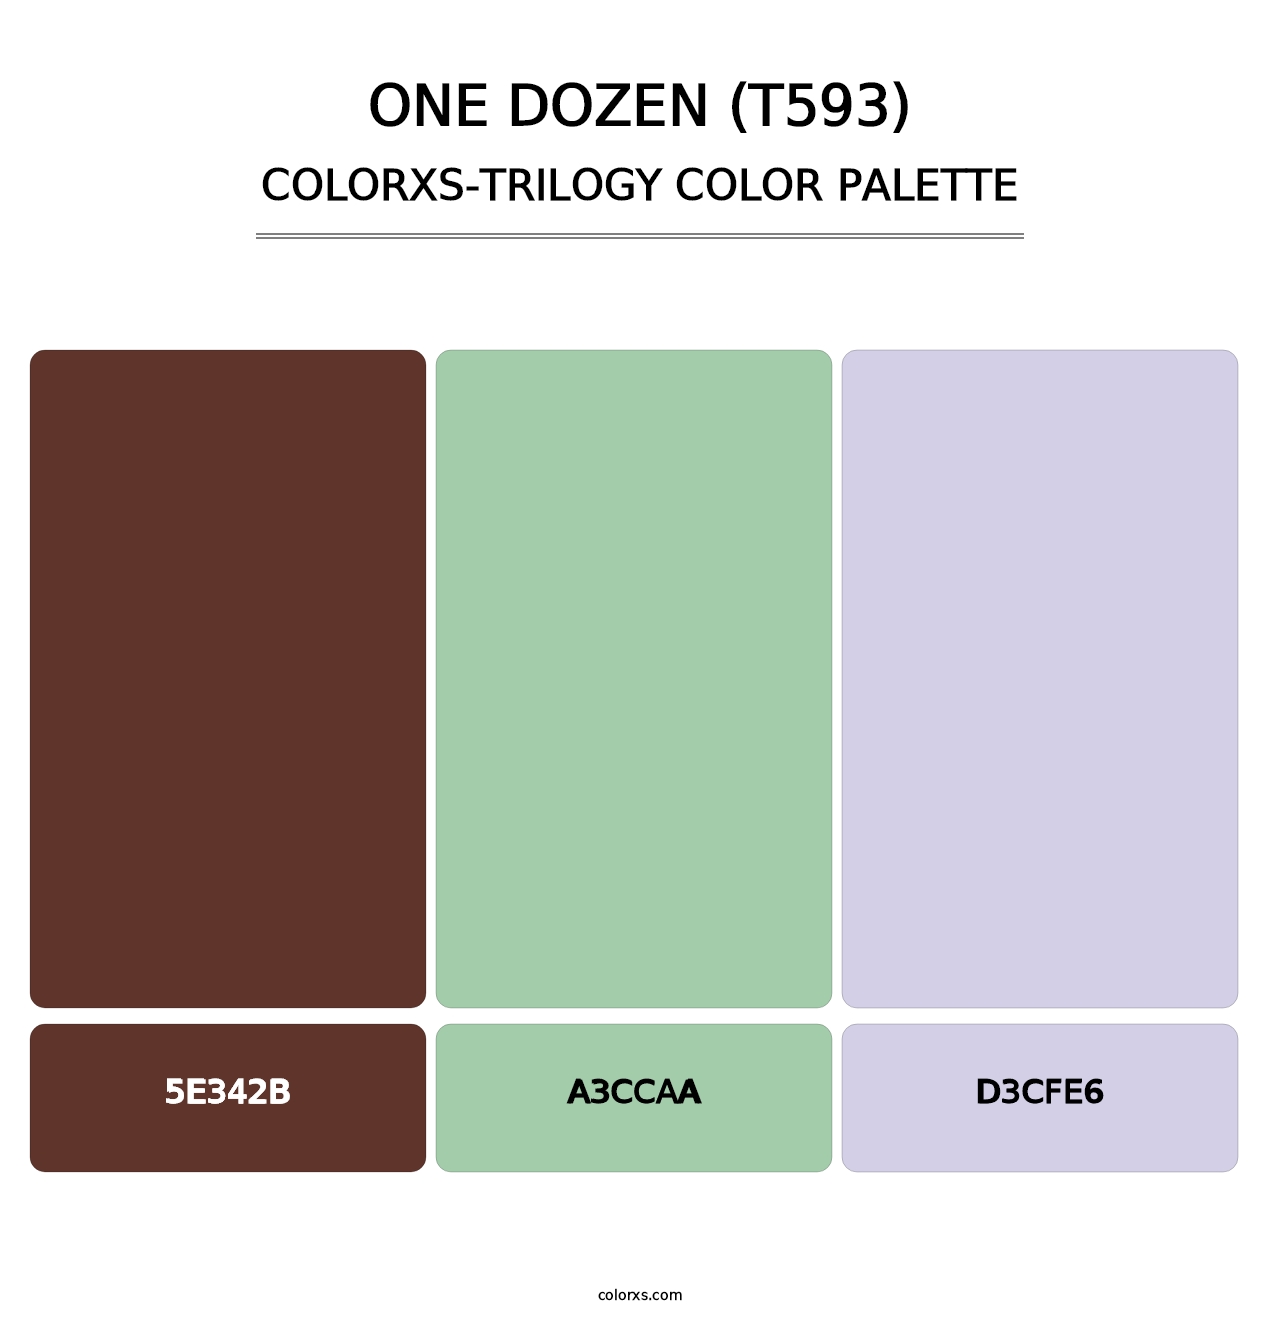 One Dozen (T593) - Colorxs Trilogy Palette